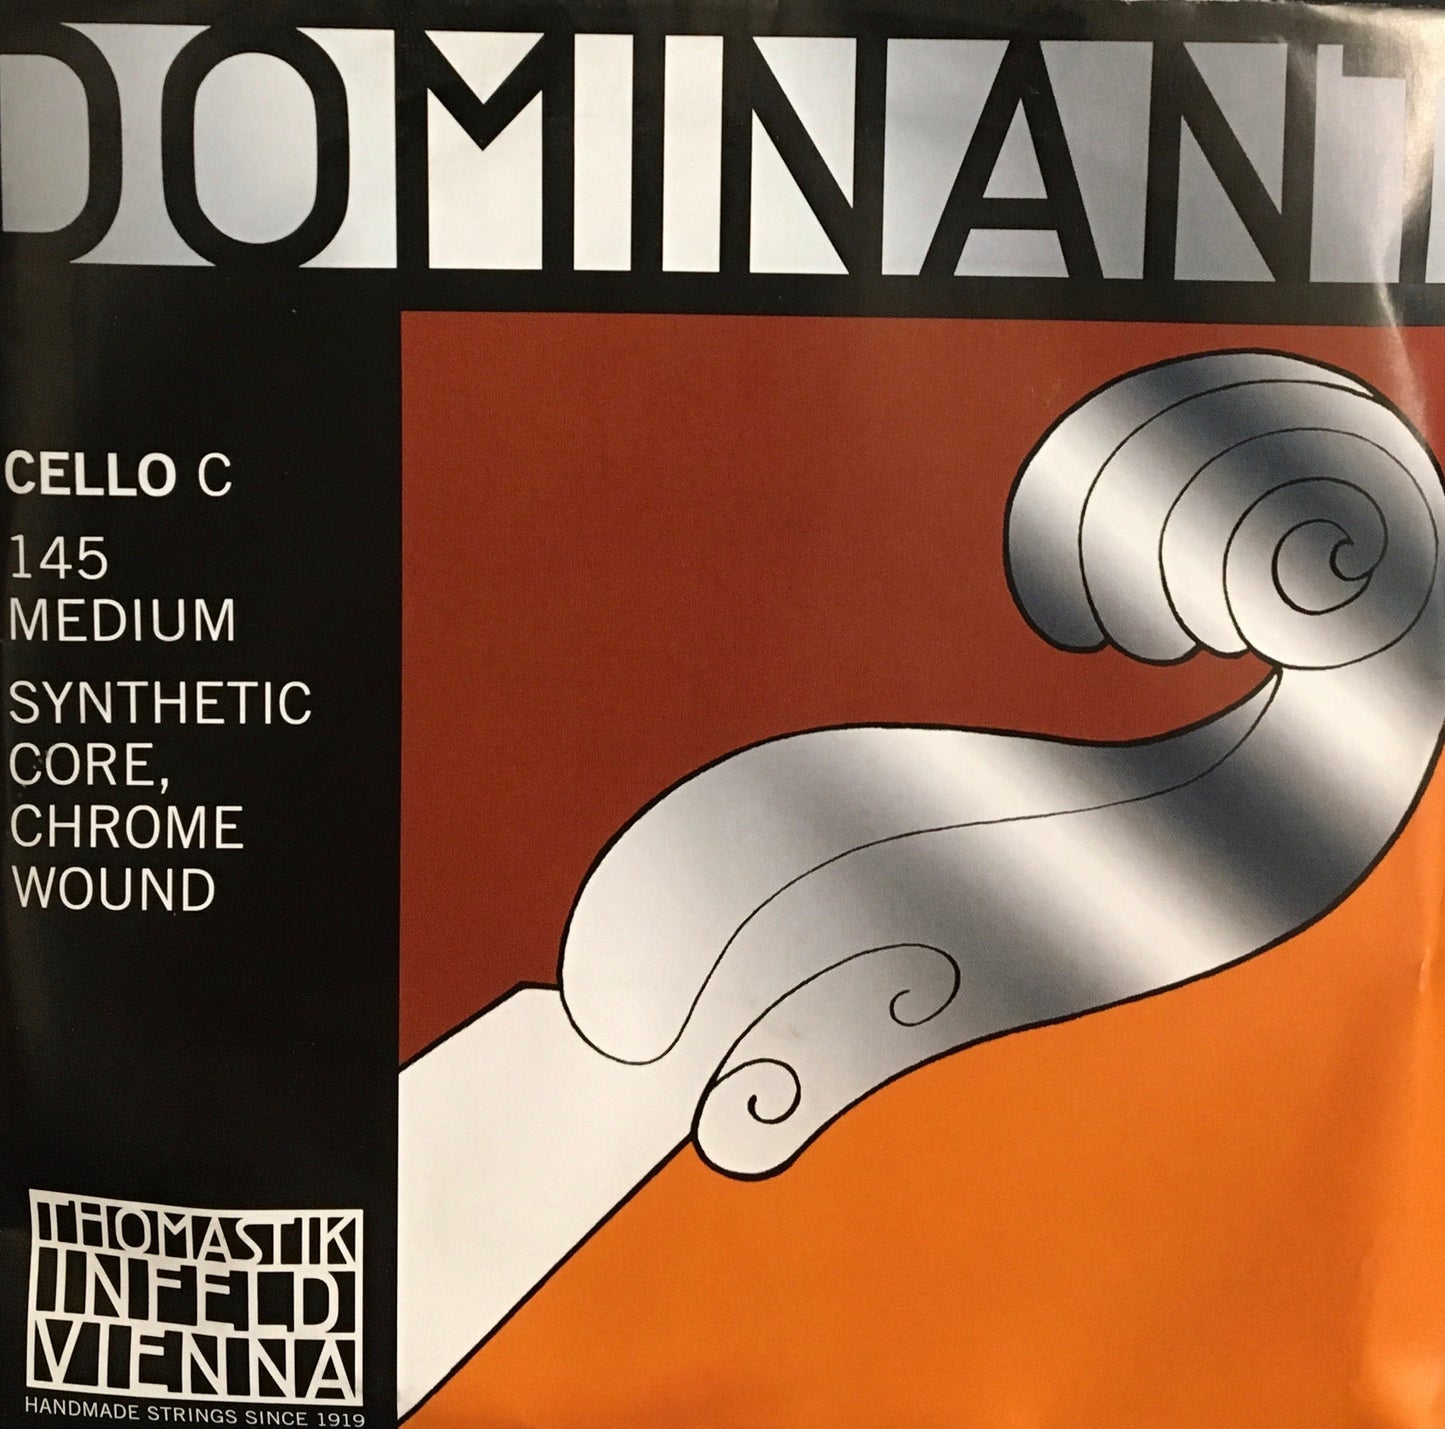 Thomastik-Infeld Dominant Cello Strings - Medium, 4/4 Strings, Bows & More